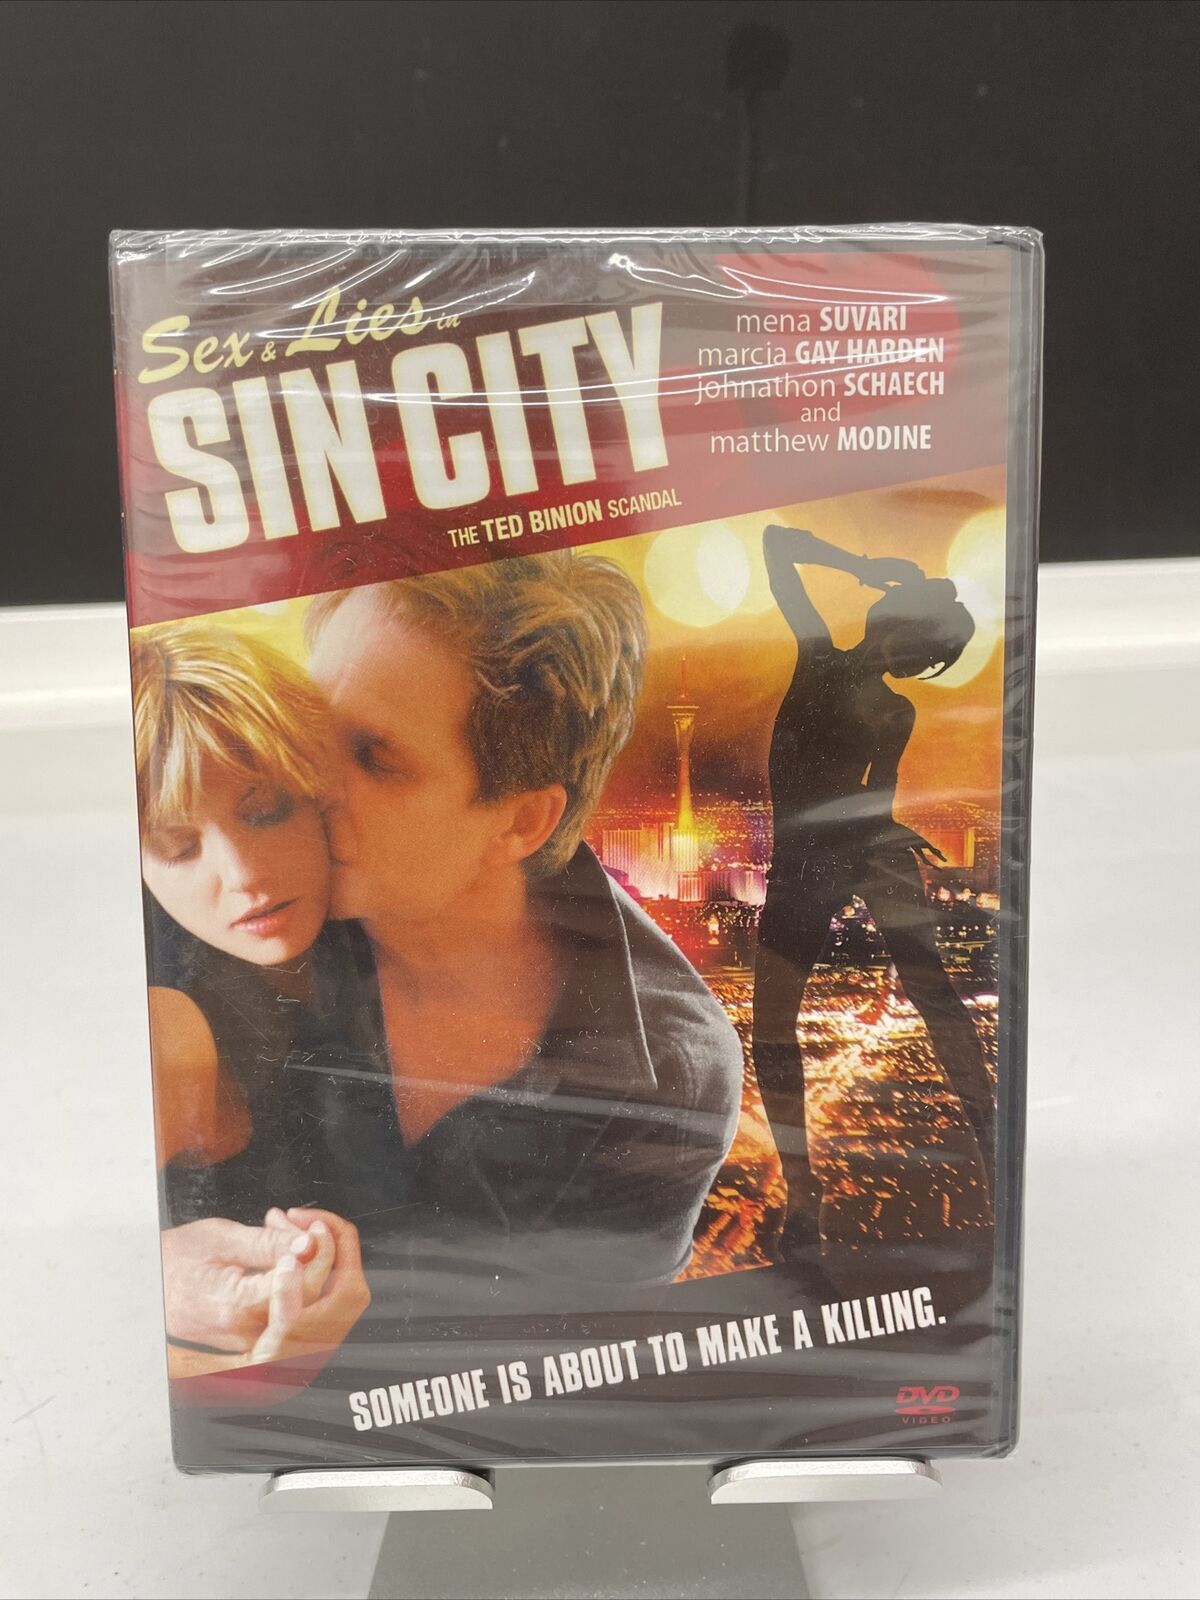 david cottongim recommends Sin City Sex Video